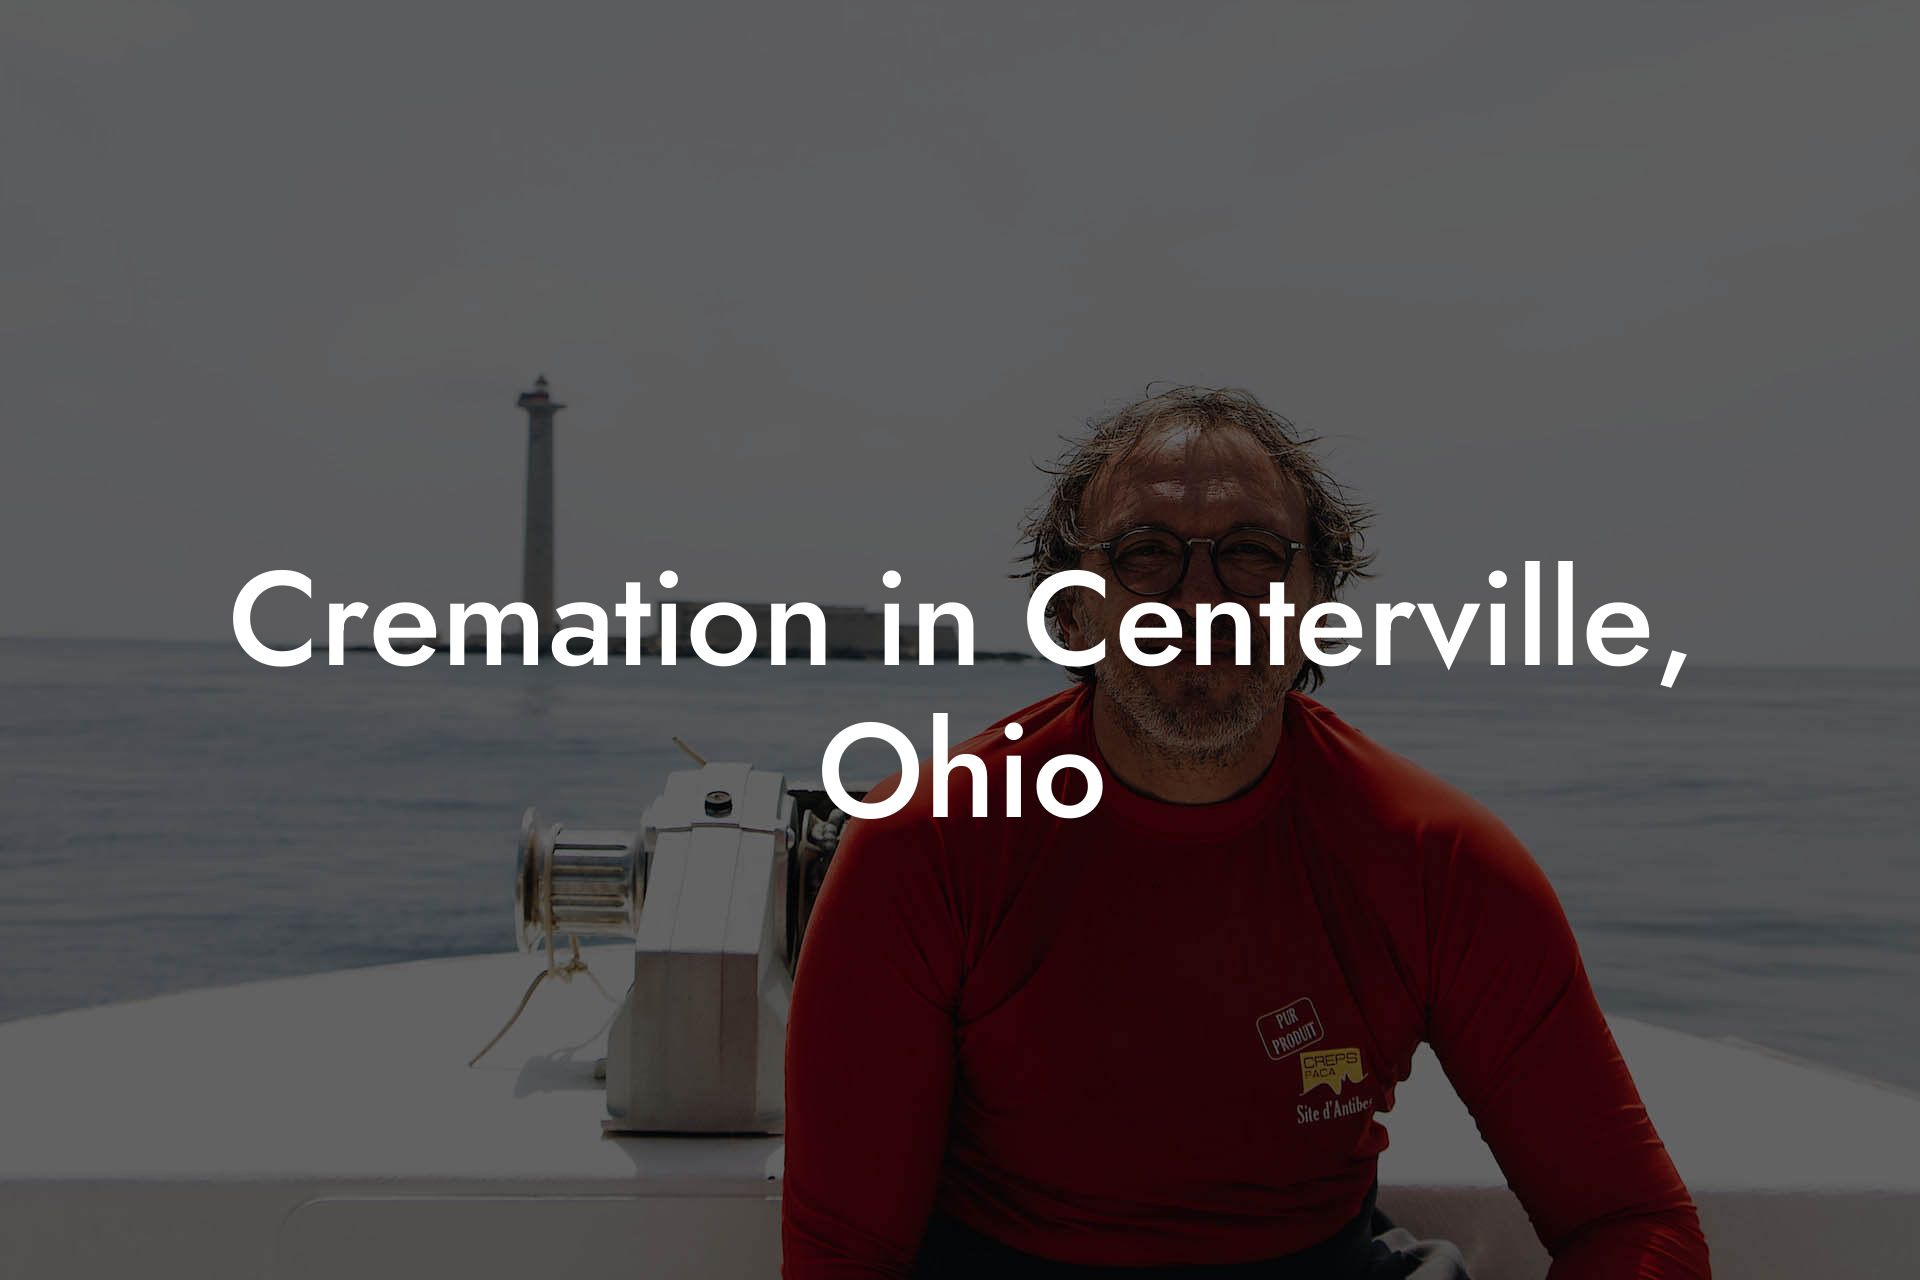 Cremation in Centerville, Ohio